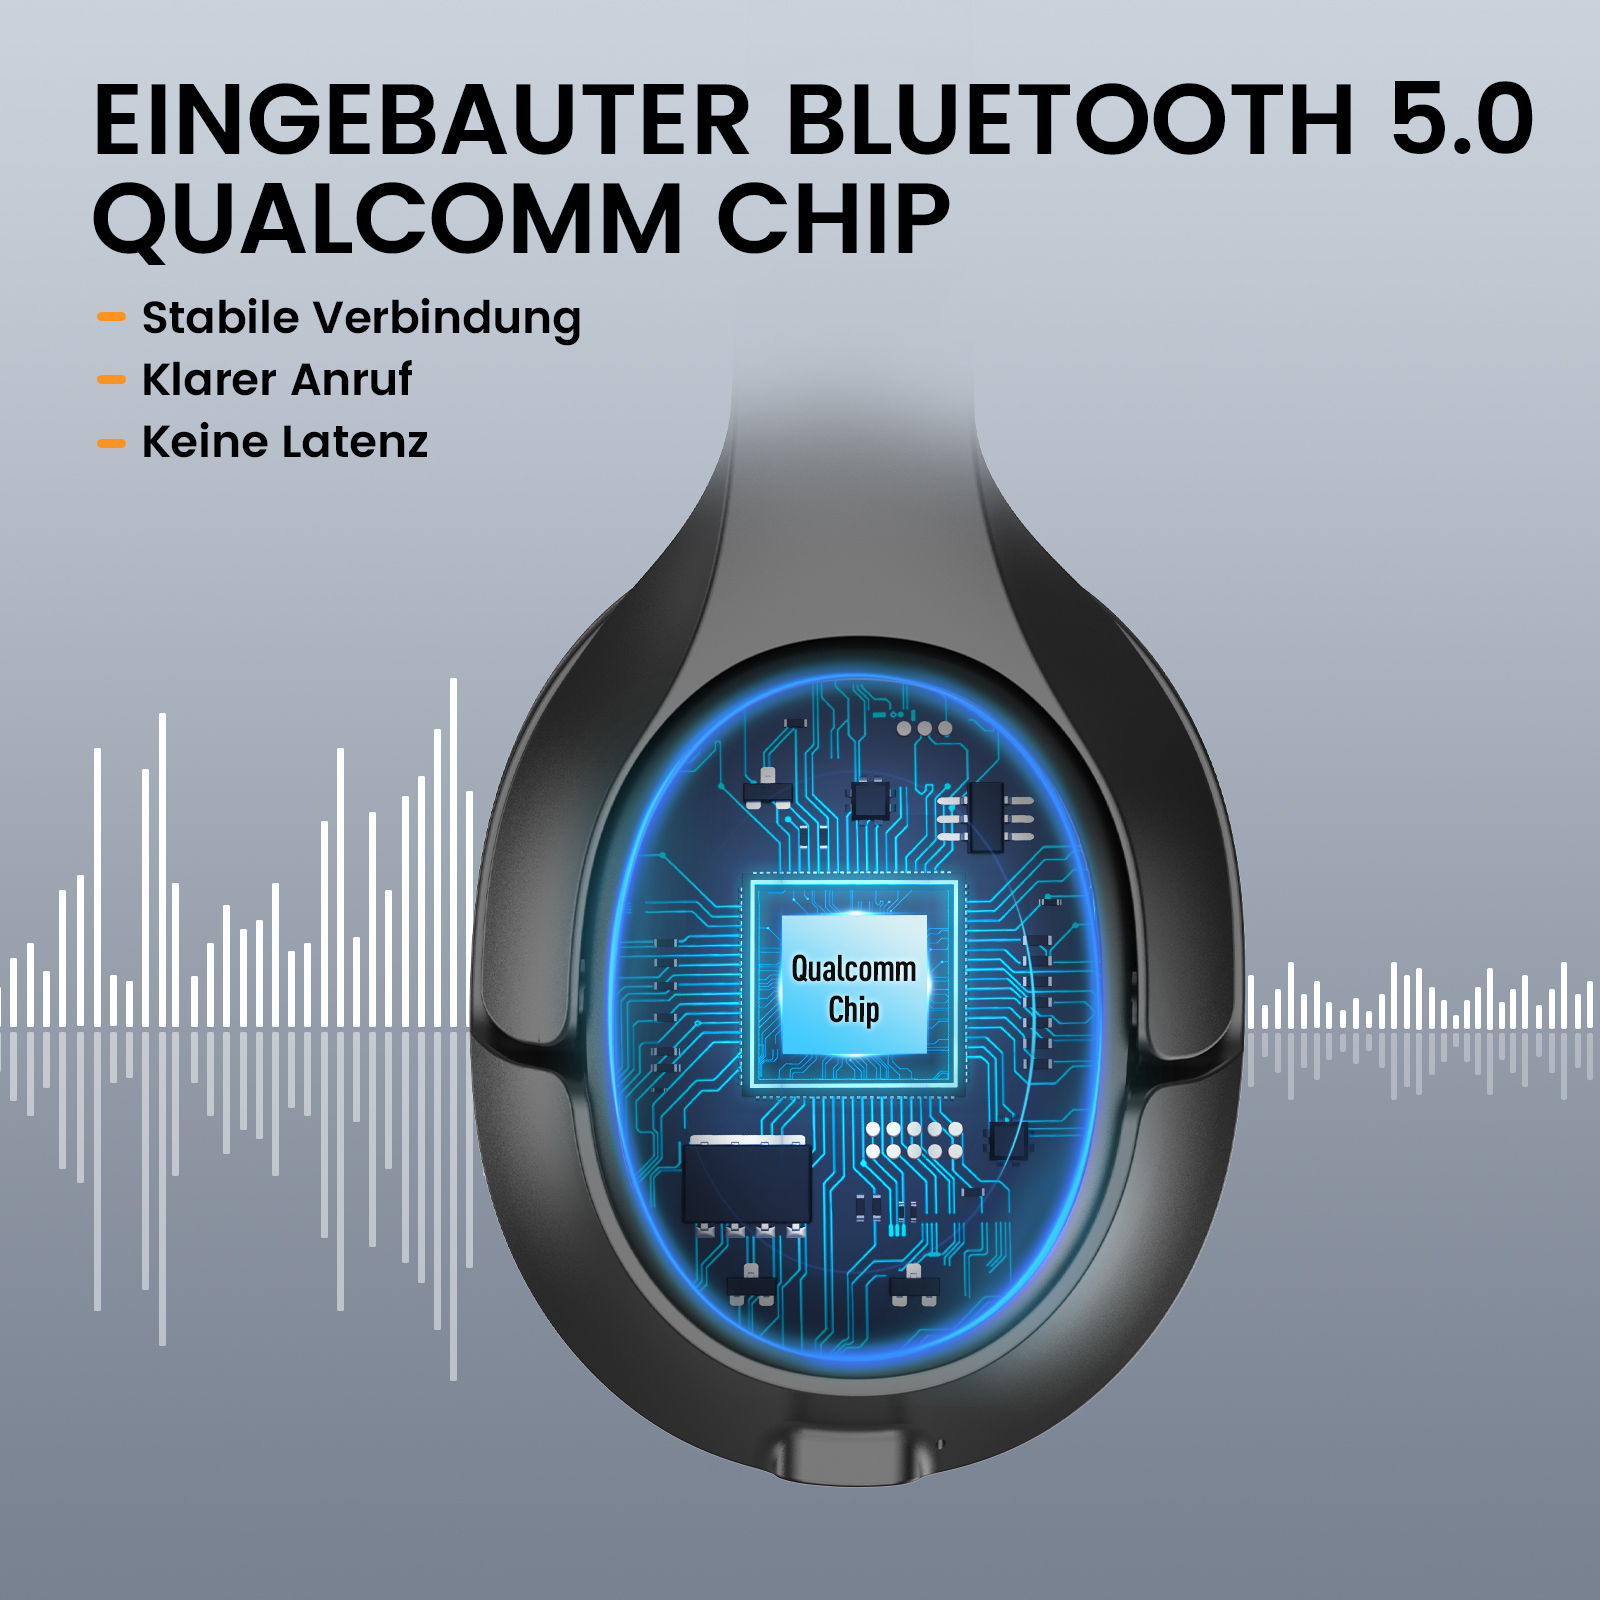 EKSA-TRADE H1, Over-ear Bluetooth Headset Black Bluetooth